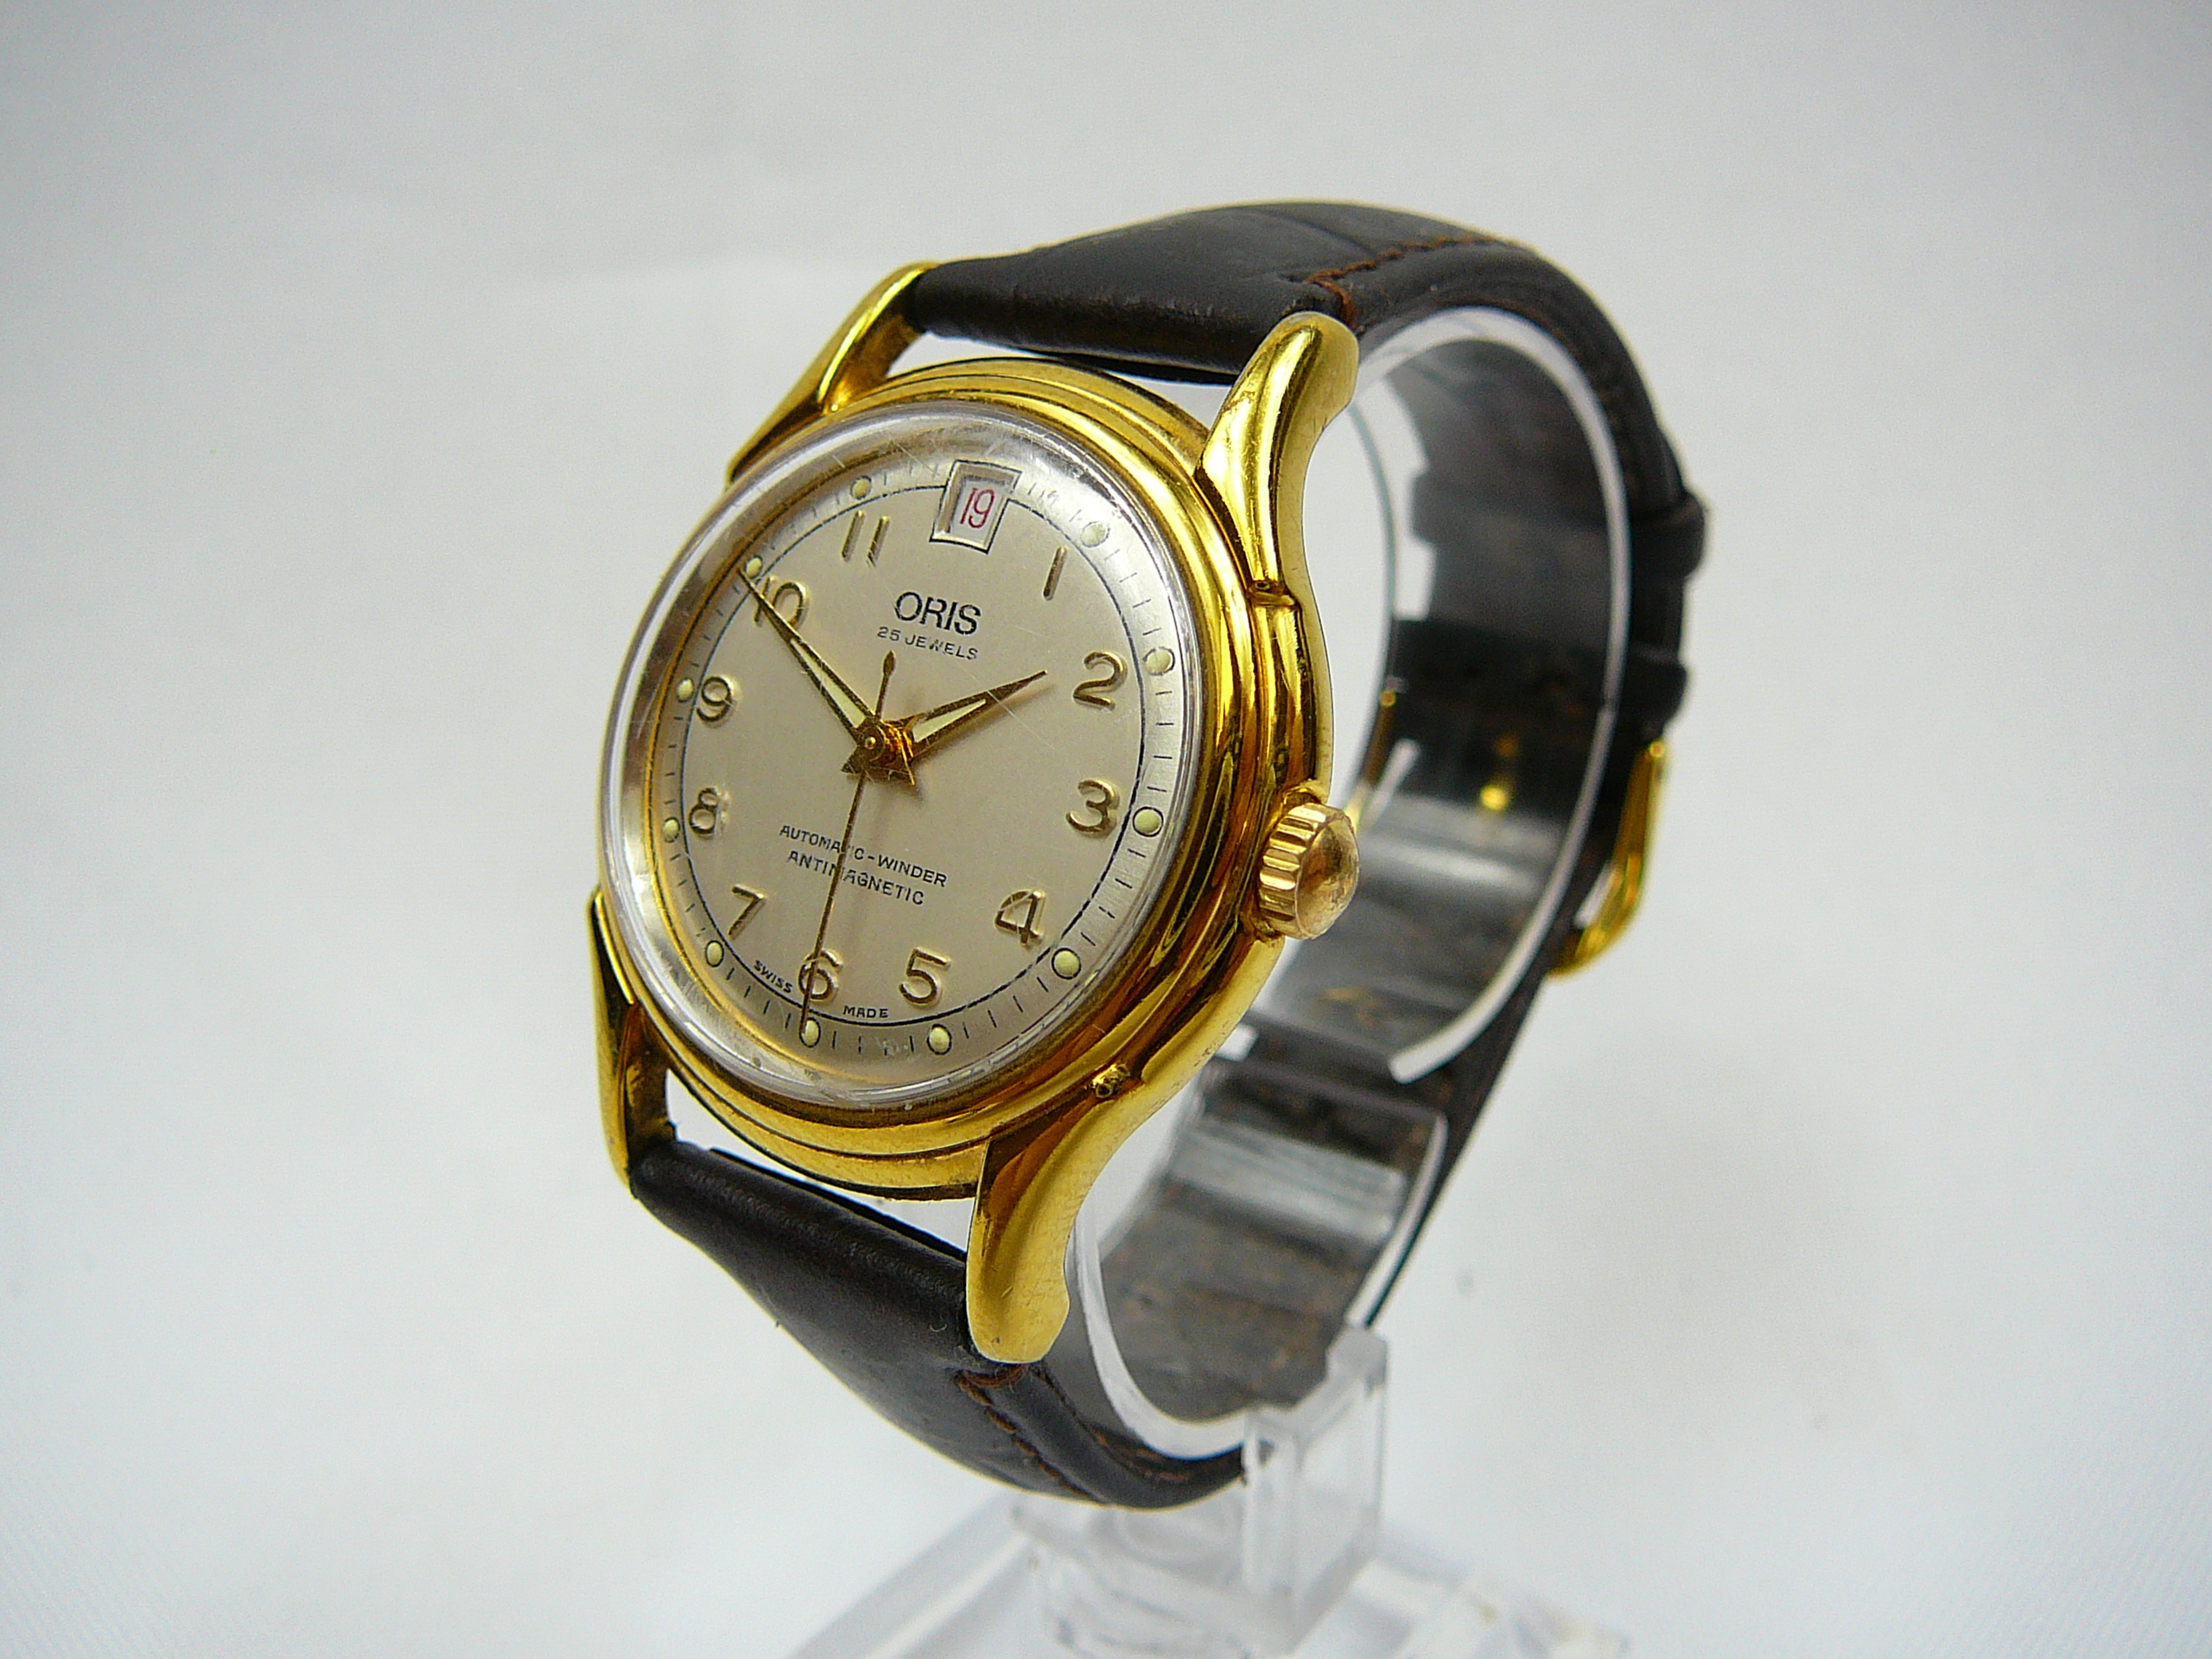 Gents Oris 7317 wristwatch - Image 10 of 11